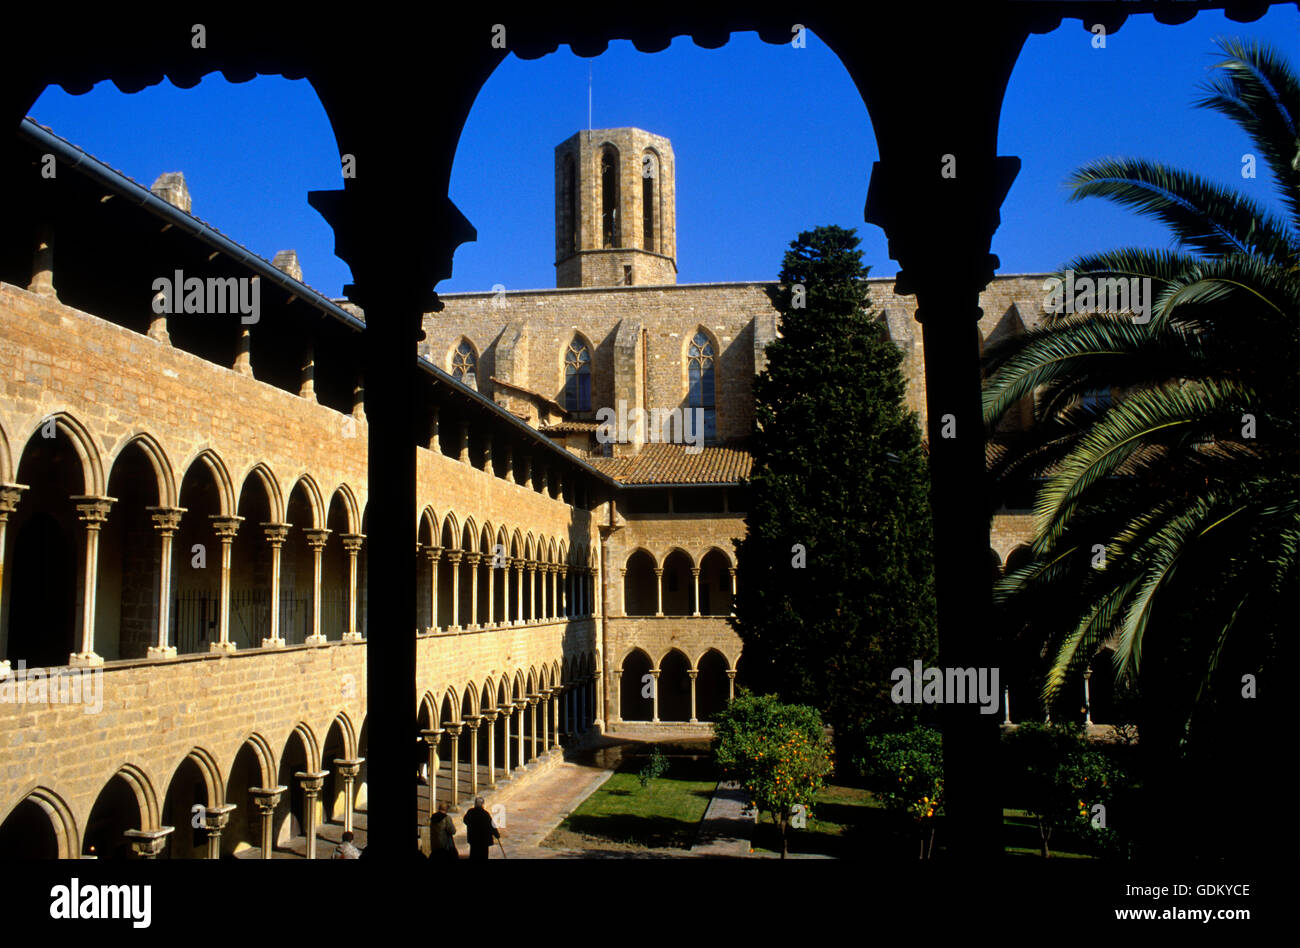 Monasterio de Pedralbes.de estilo gótico. Siglo XIV, Barcelona, España Foto de stock